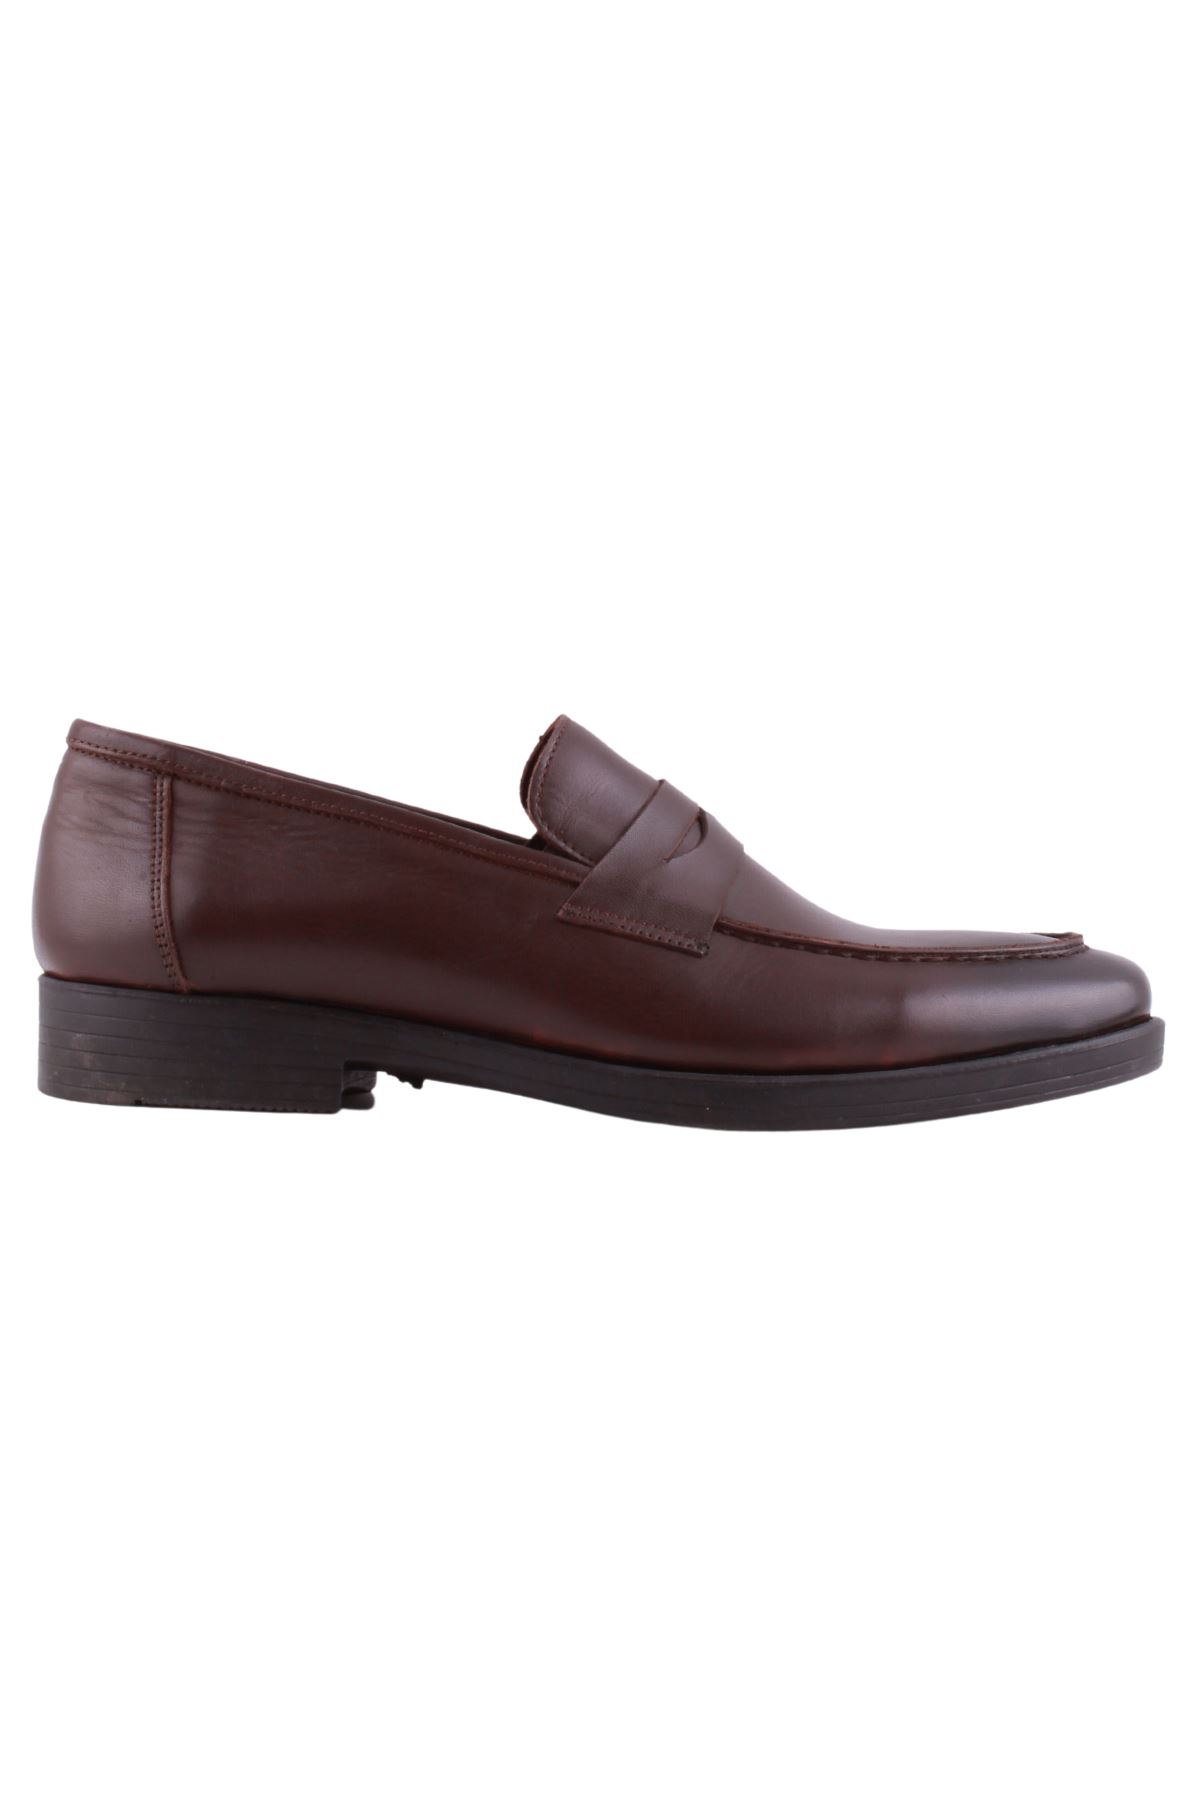 Giyinsen Erkek Kahverengi Günlük Ayakkabı - 24KH44000030